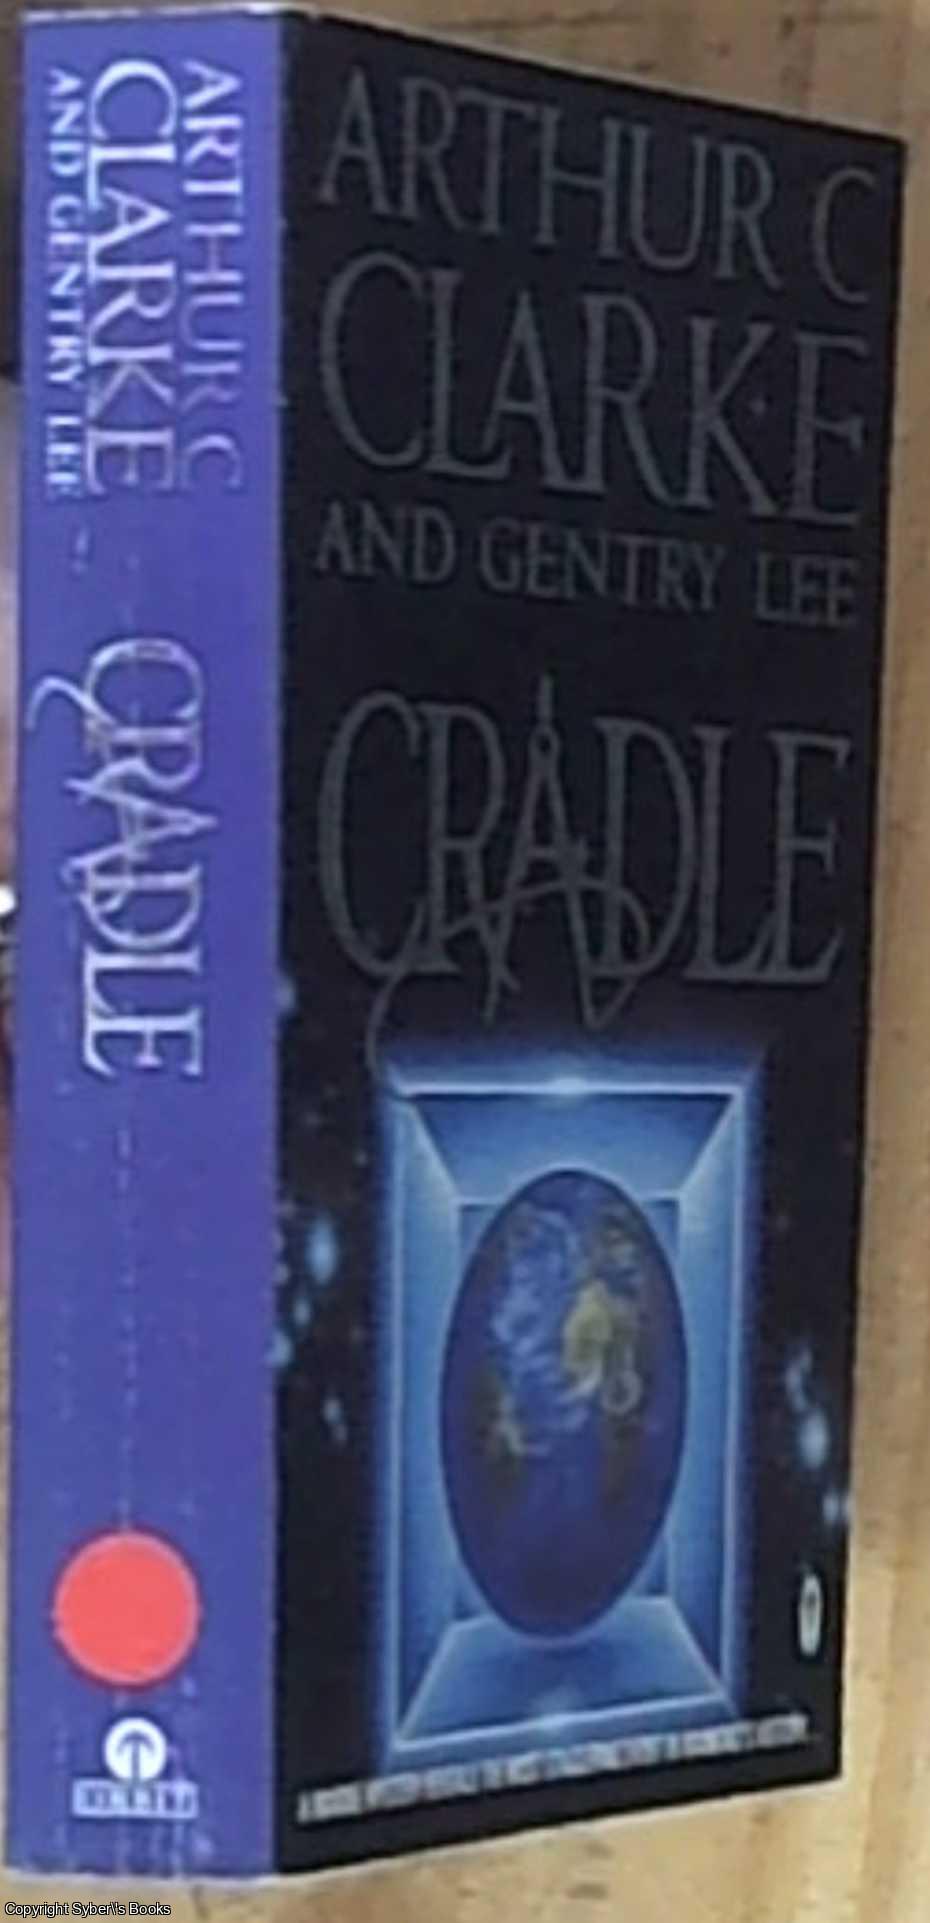 Clarke, Arthur C. & Lee, Gentry - Cradle